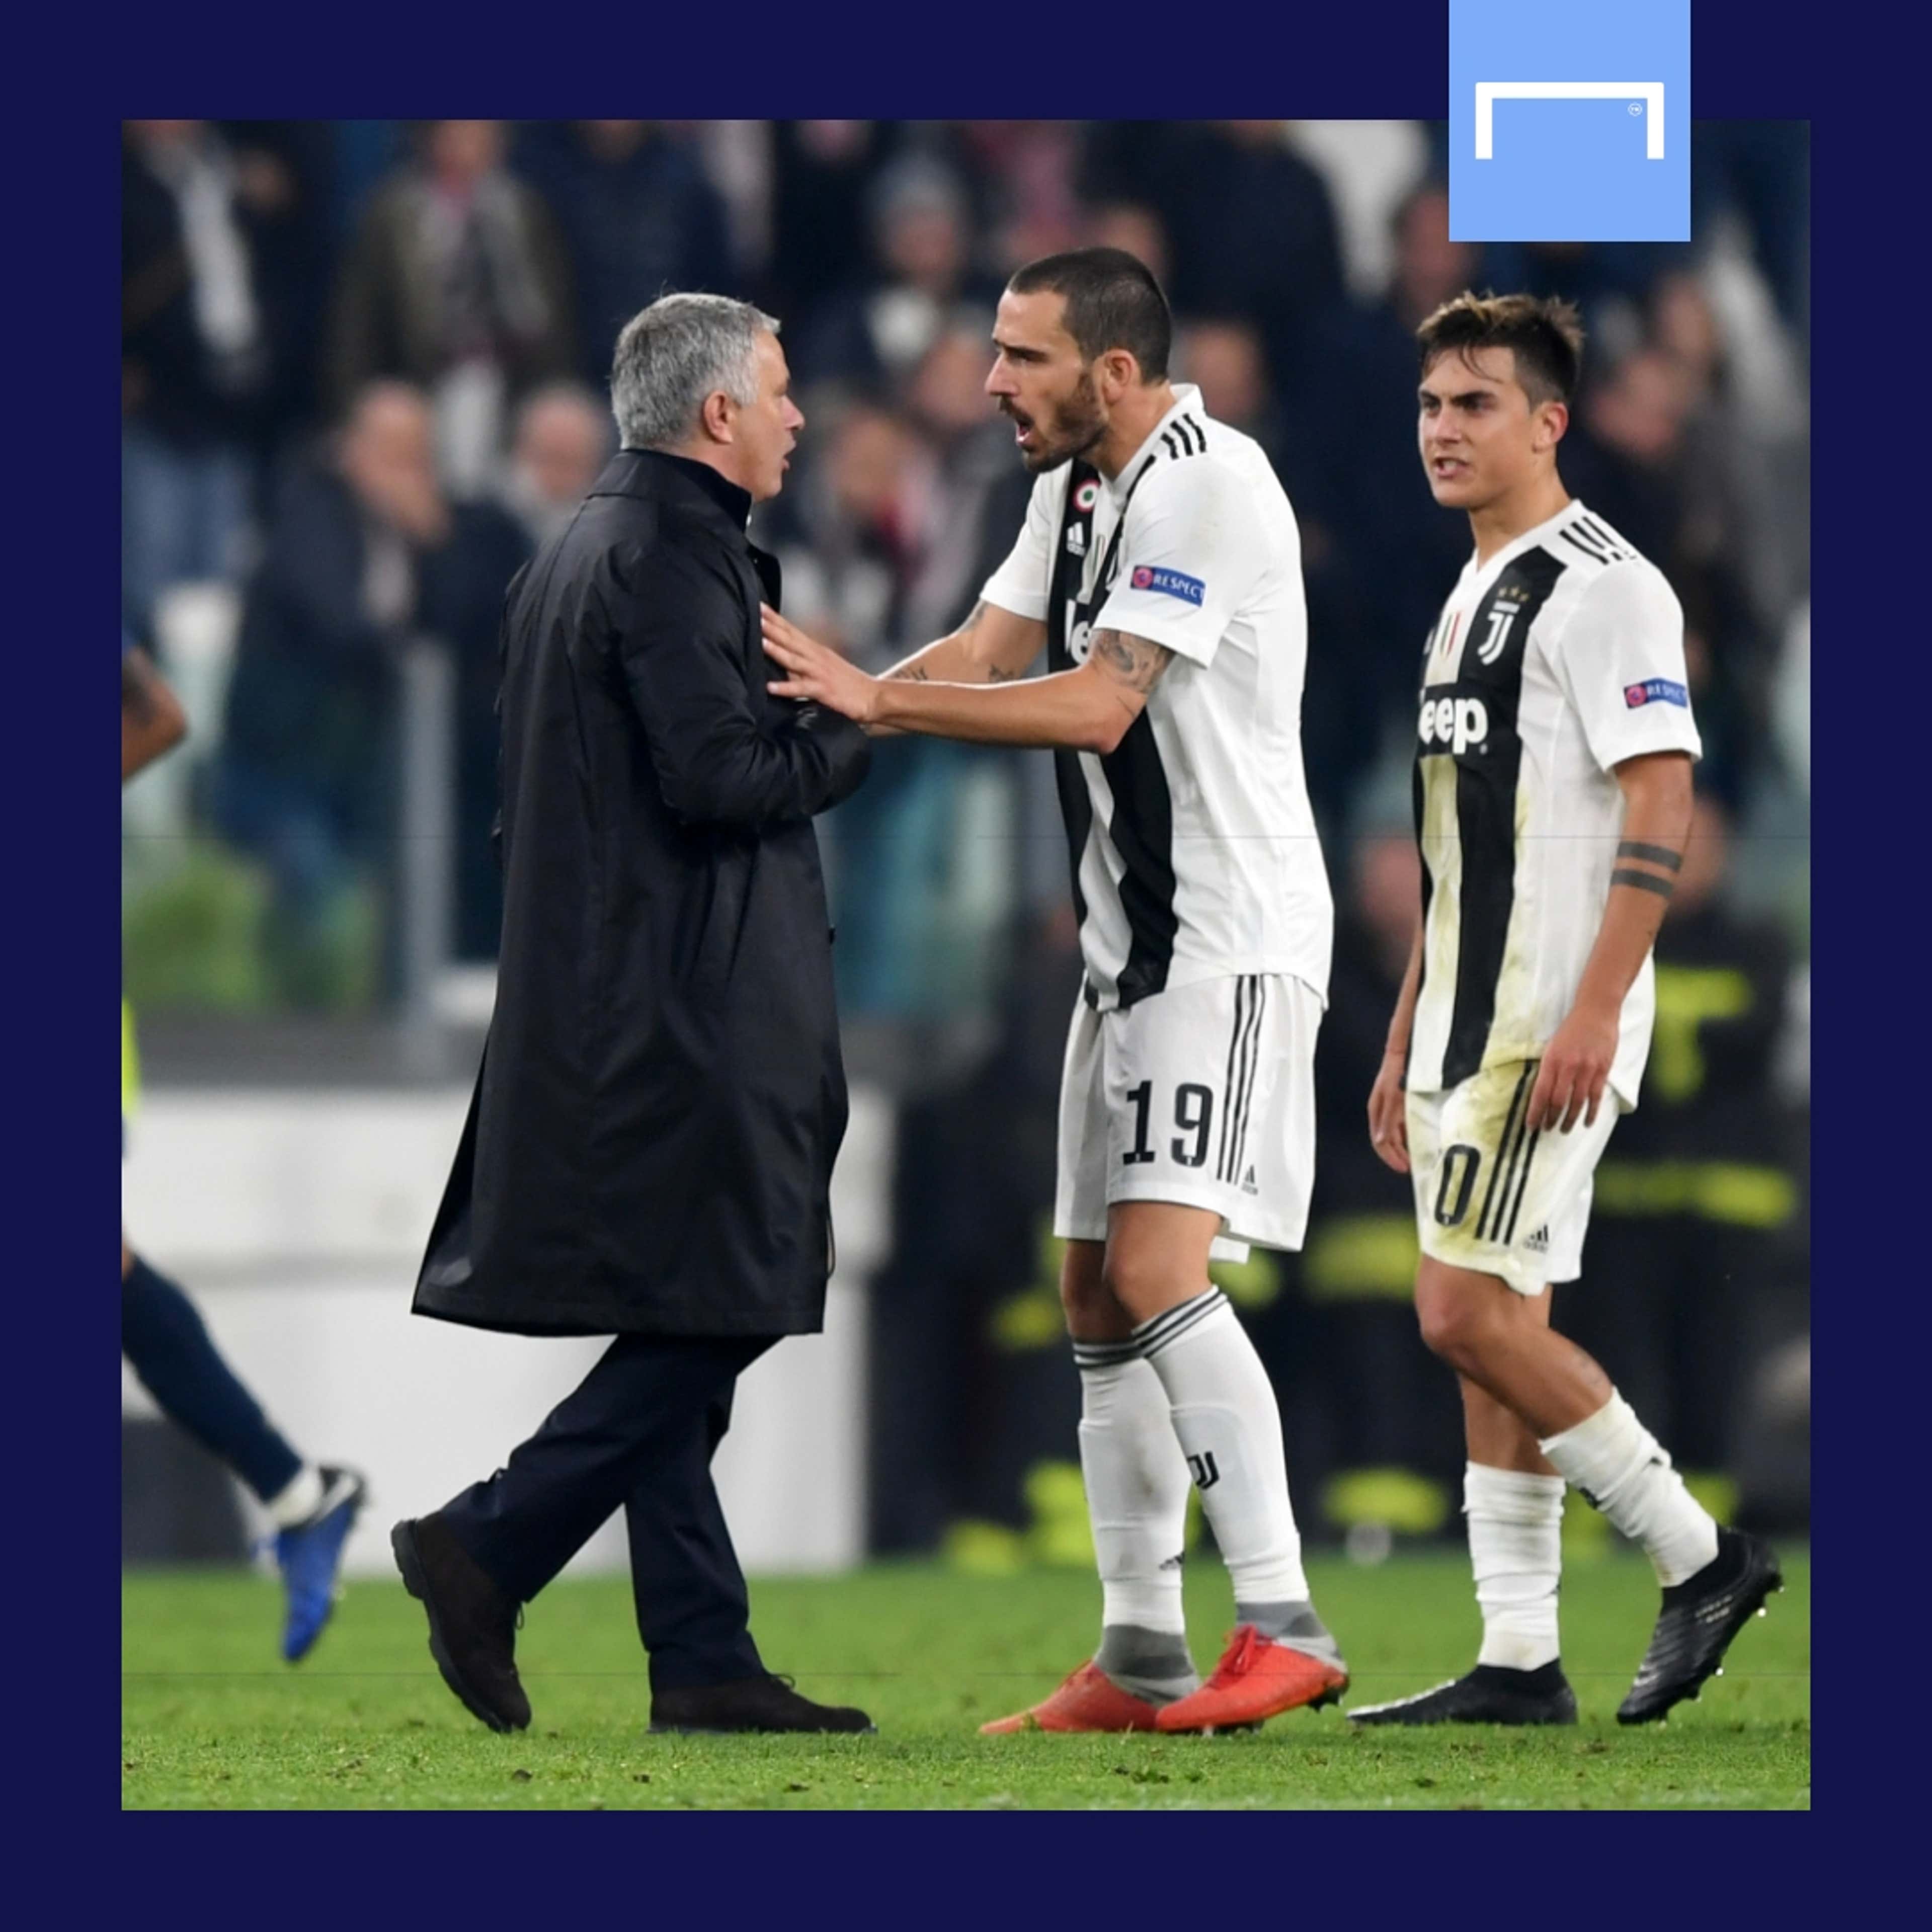 Jose Mourinho Leonardo Bonucci Juventus Manchester United 2018 Champions League GFX